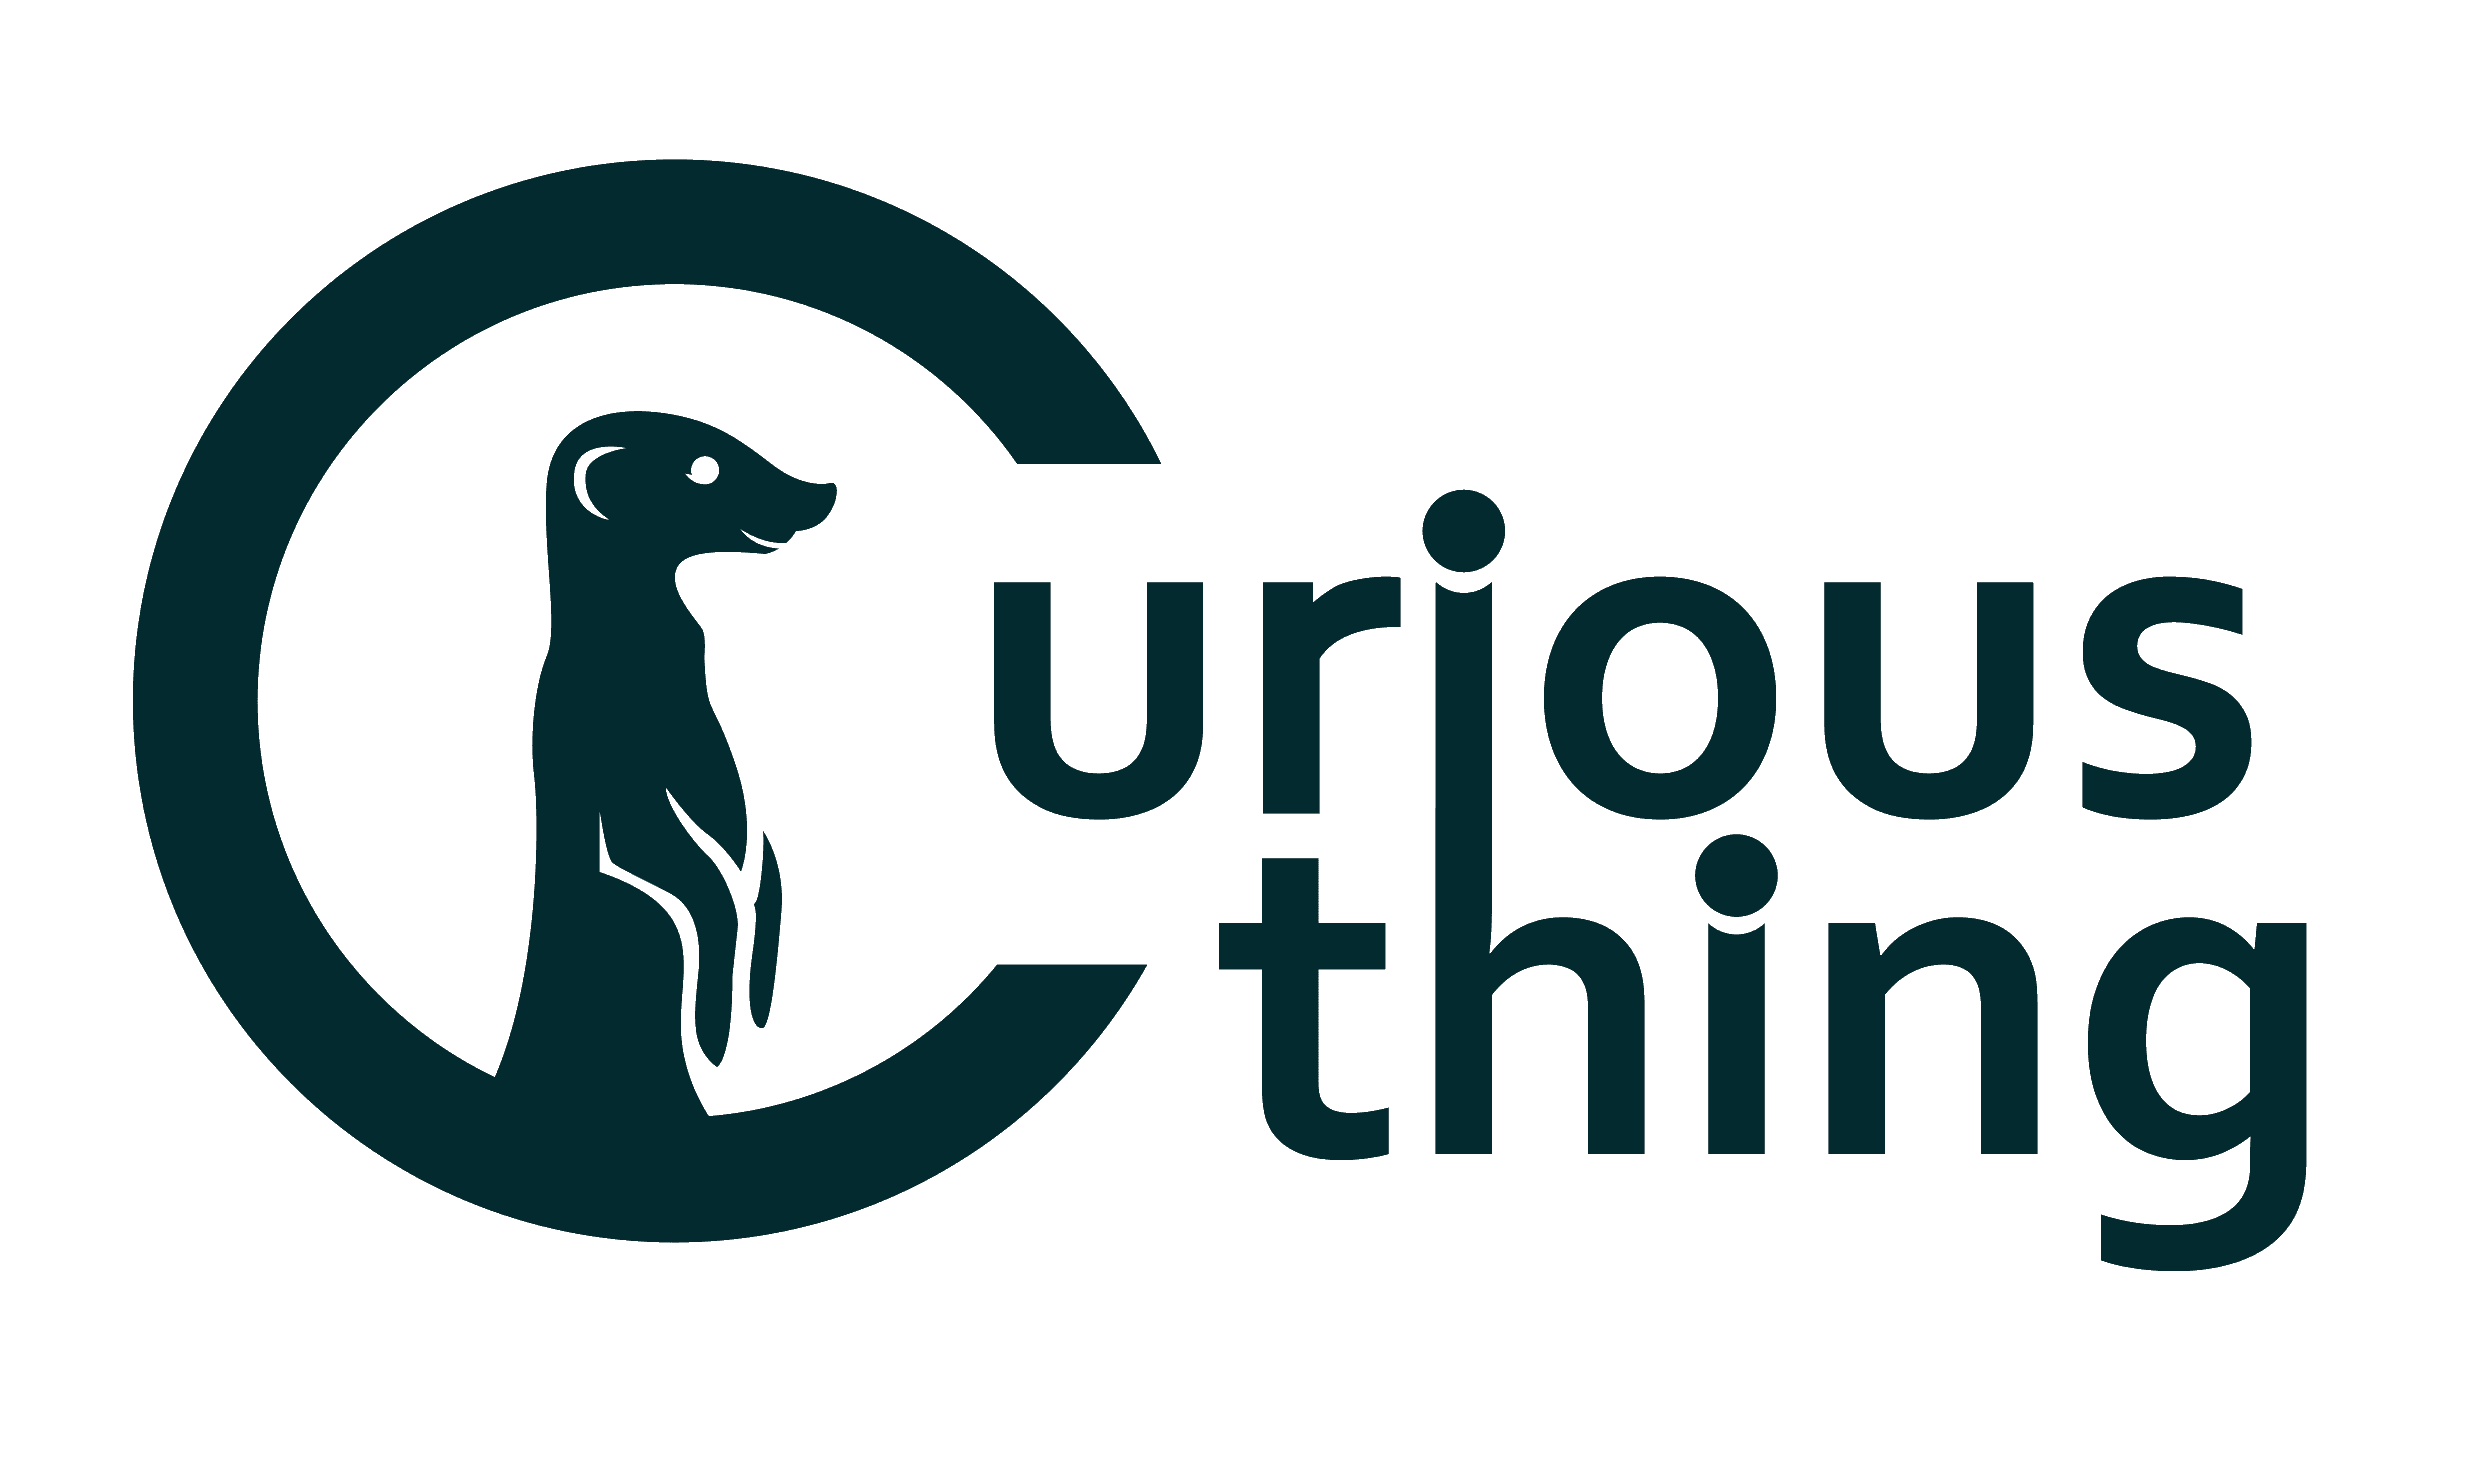 curiousthing logo